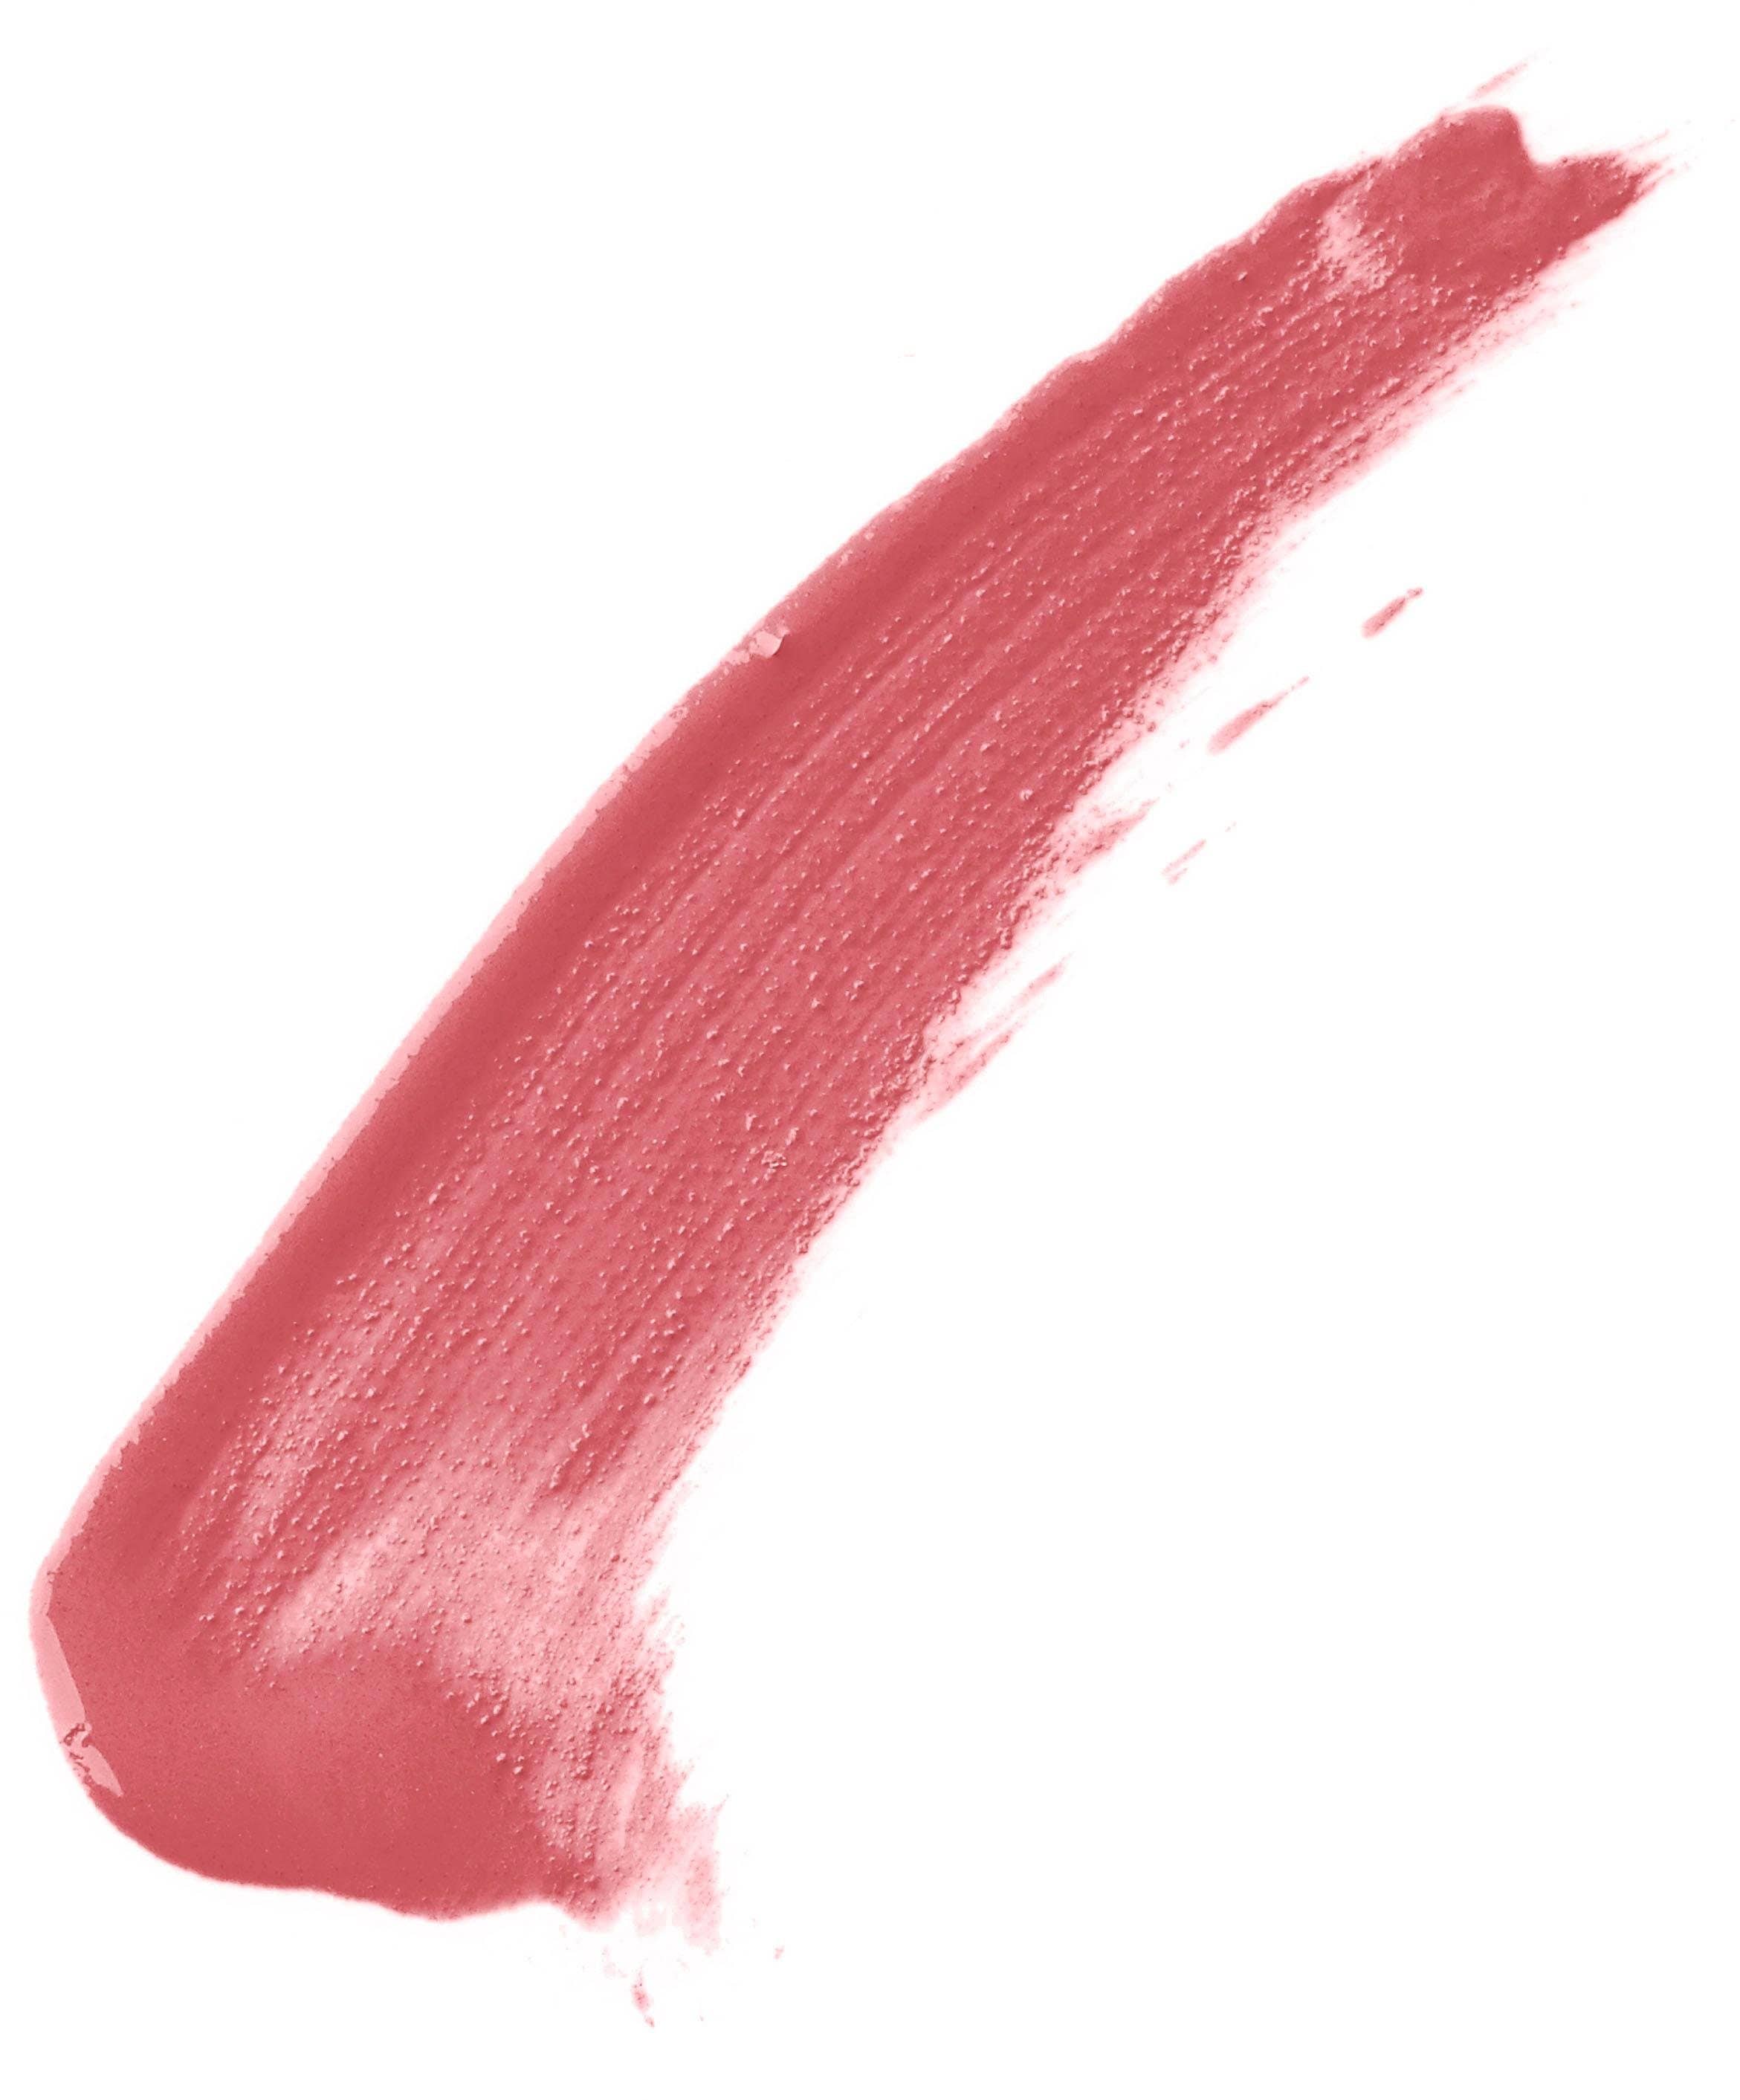 MAYBELLINE NEW YORK Lippenstift »Super Stay Matte Ink Pinks«